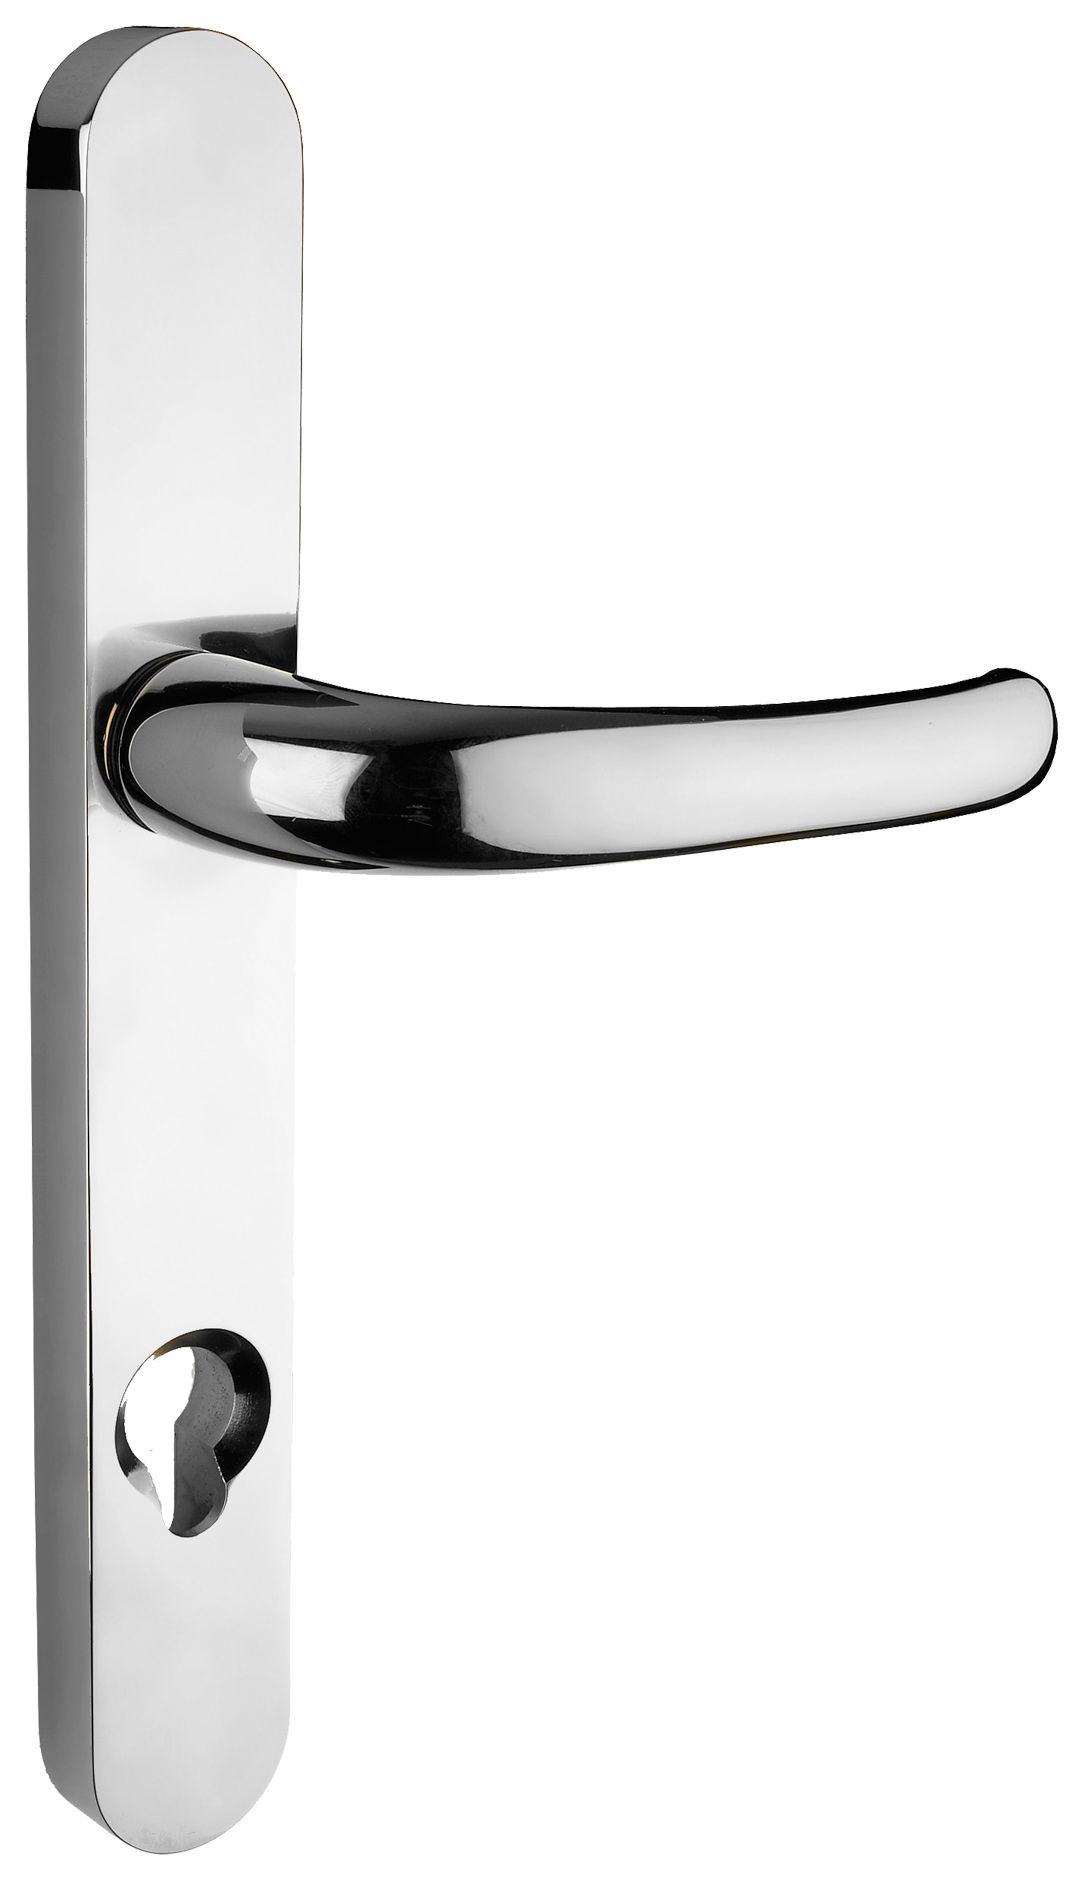 Image of Yale MK3 Security Door Handle - Polished Chrome